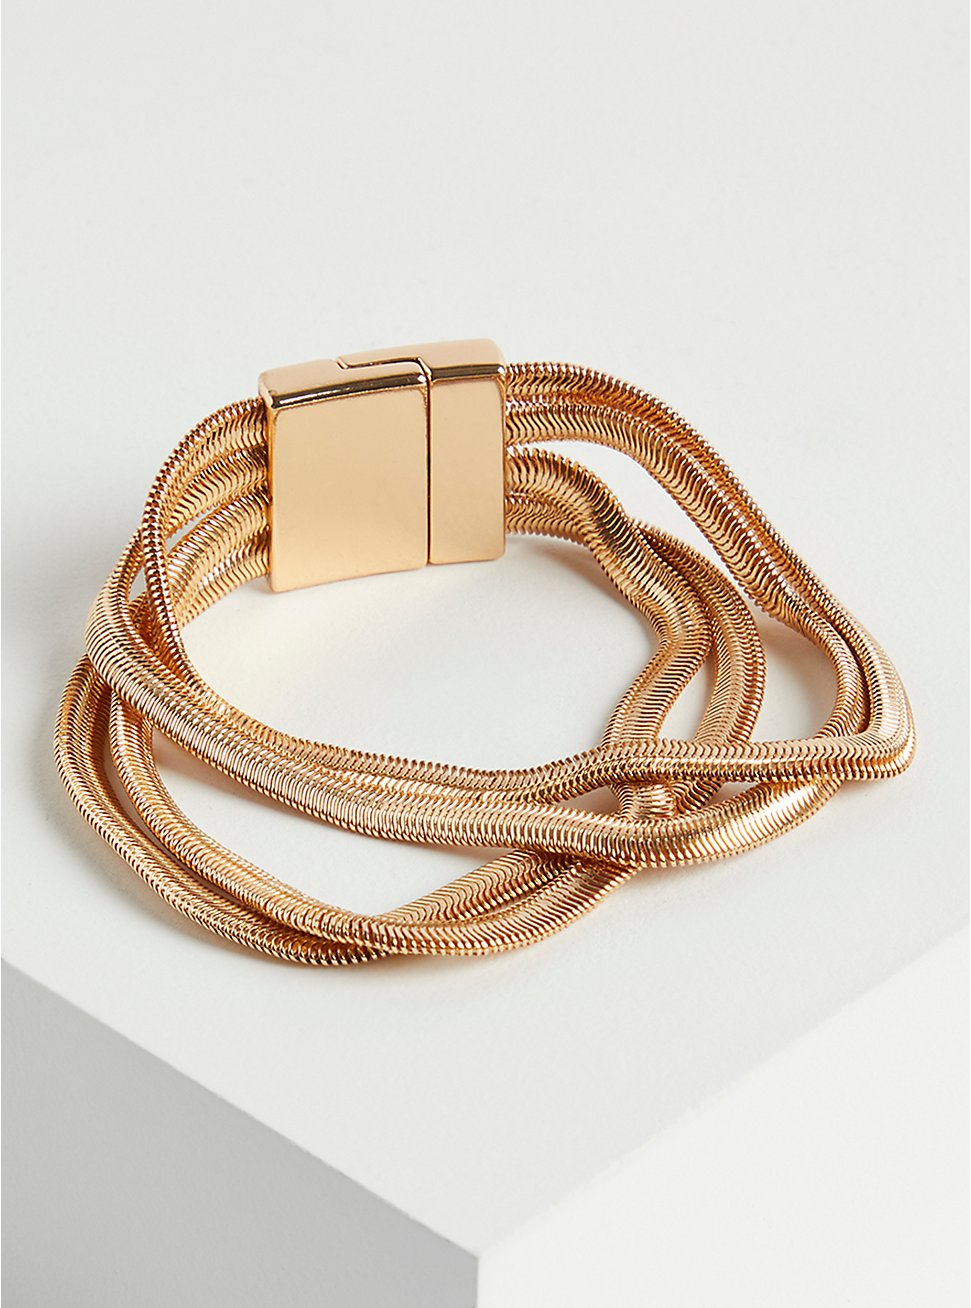 Plus Size Snake Chain Magnetic Bracelet - Gold Tone, GOLD, hi-res